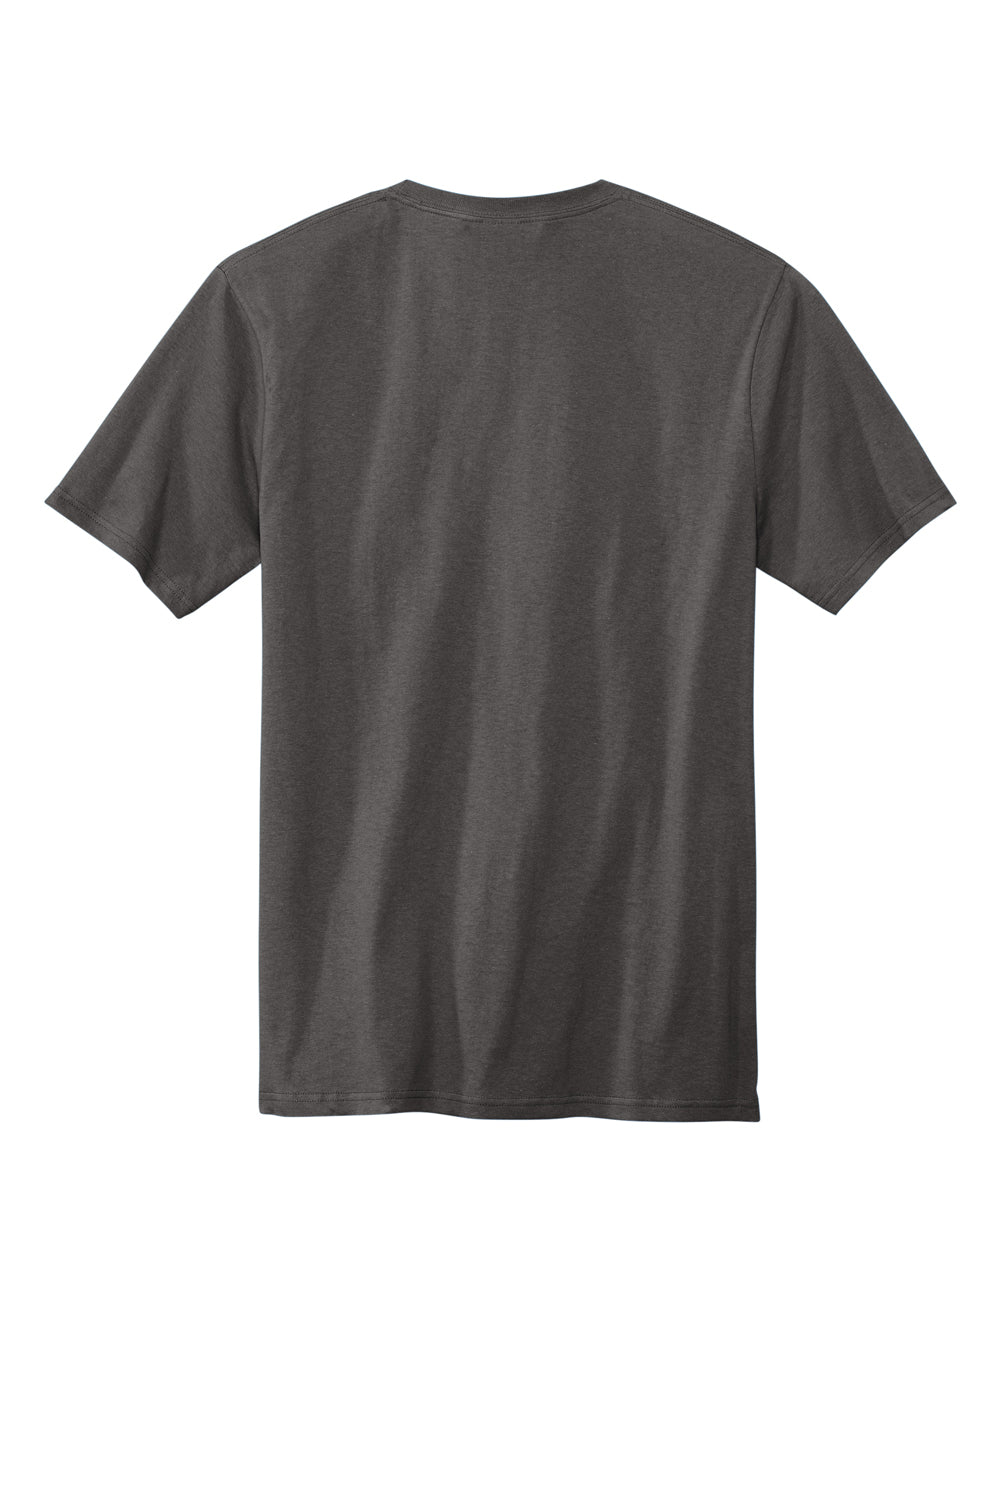 Volunteer Knitwear VL100P USA Made All American Short Sleeve Crewneck T-Shirt w/ Pocket Steel Grey Flat Back